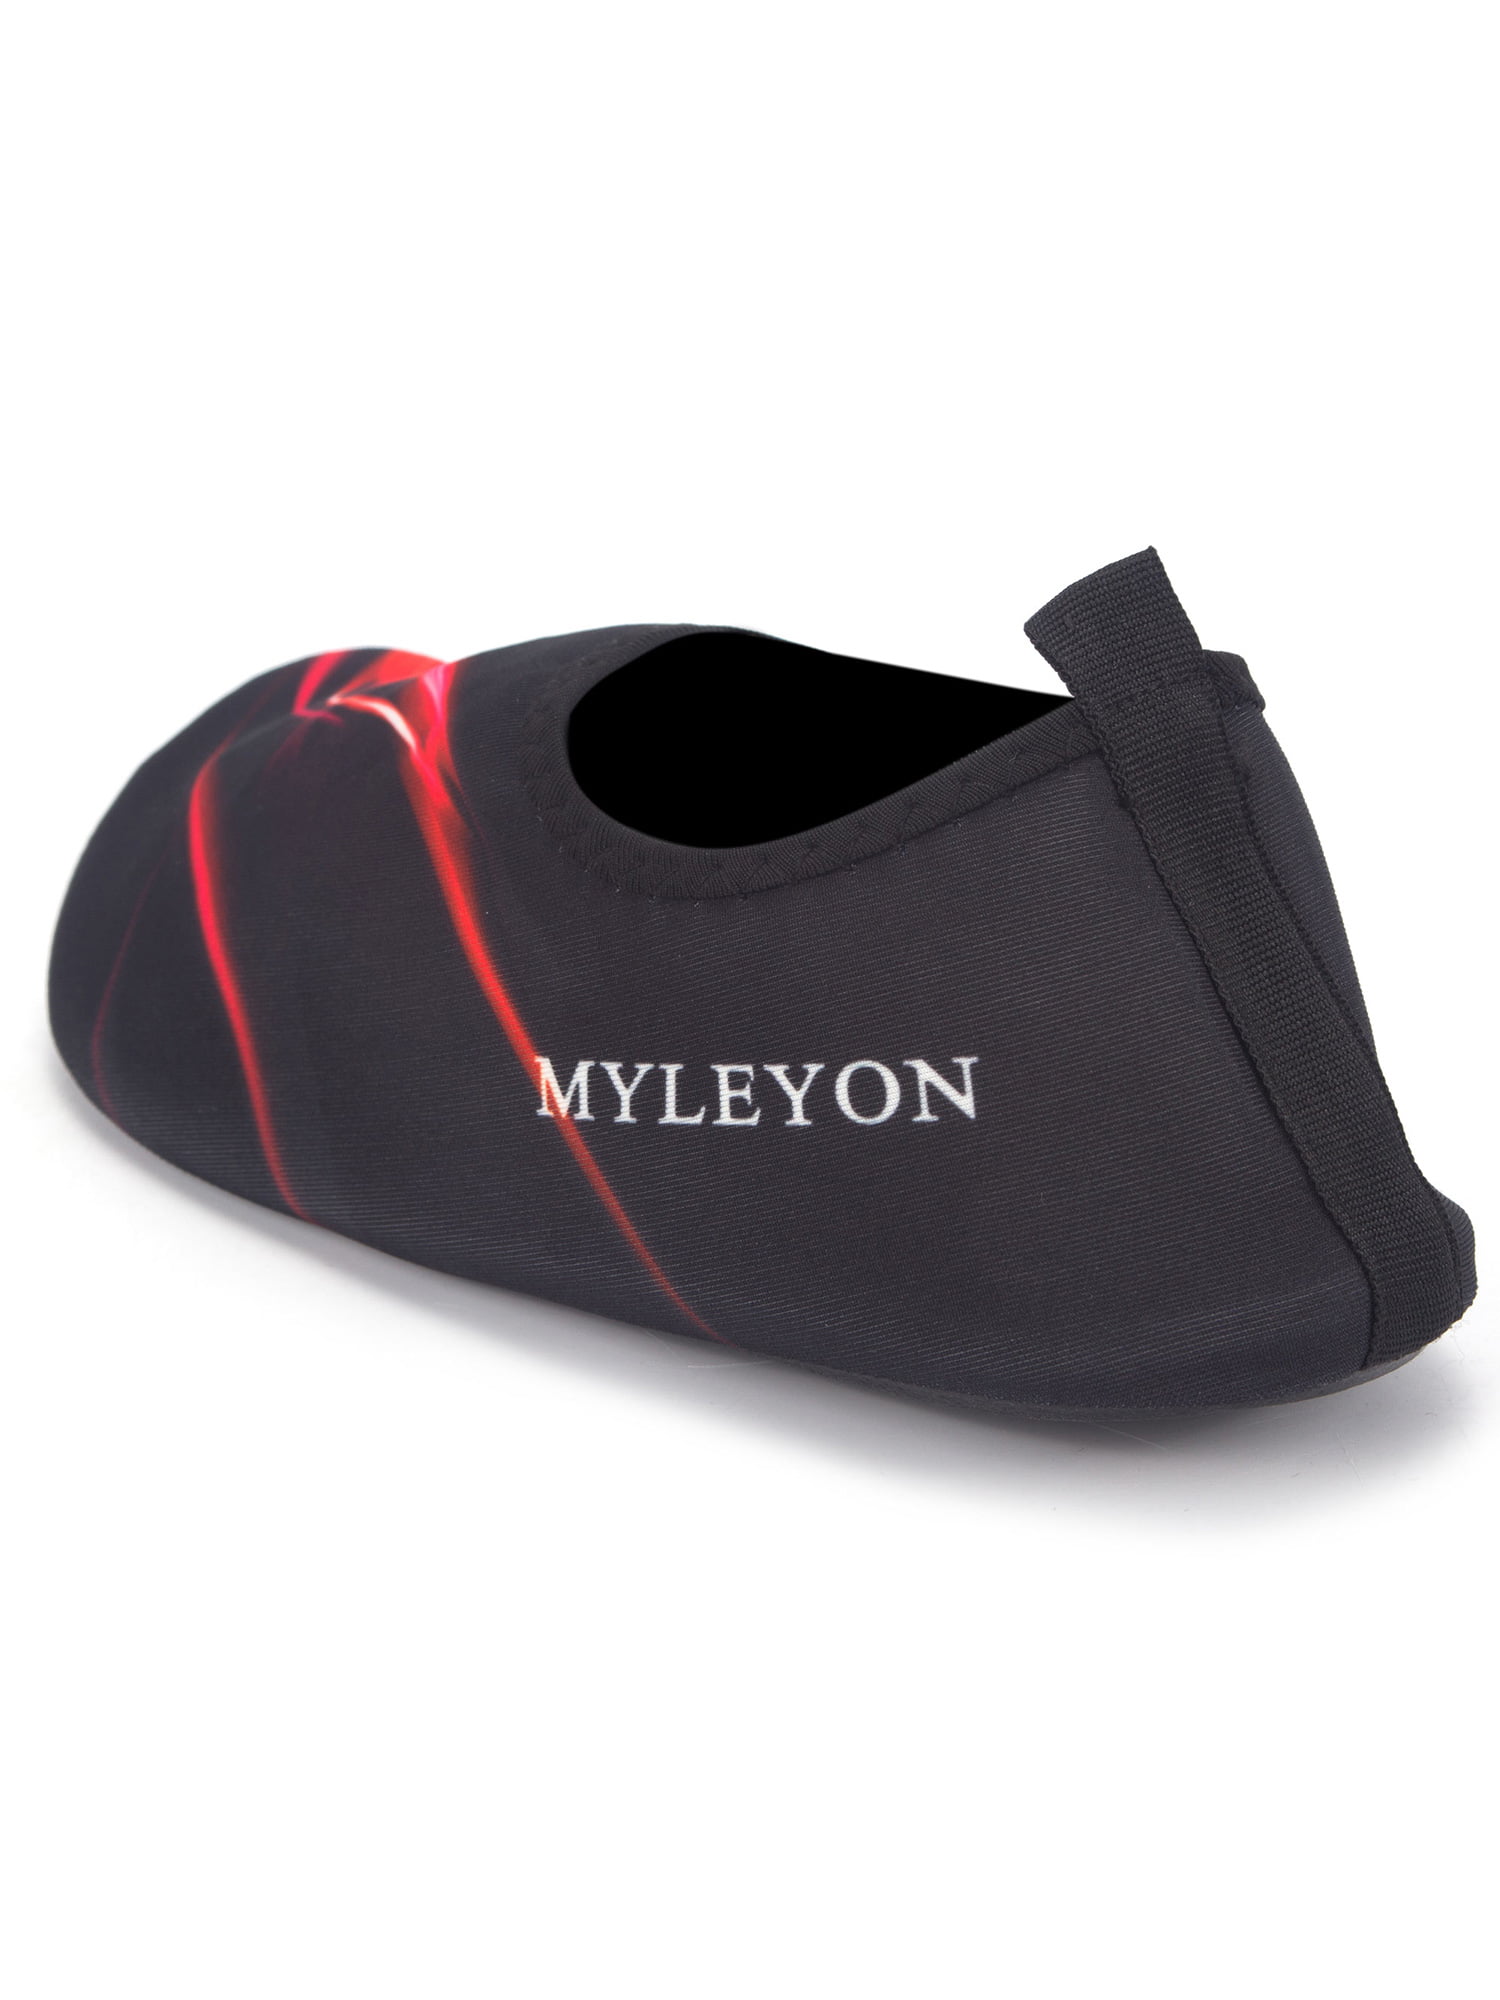 myleyon shoes